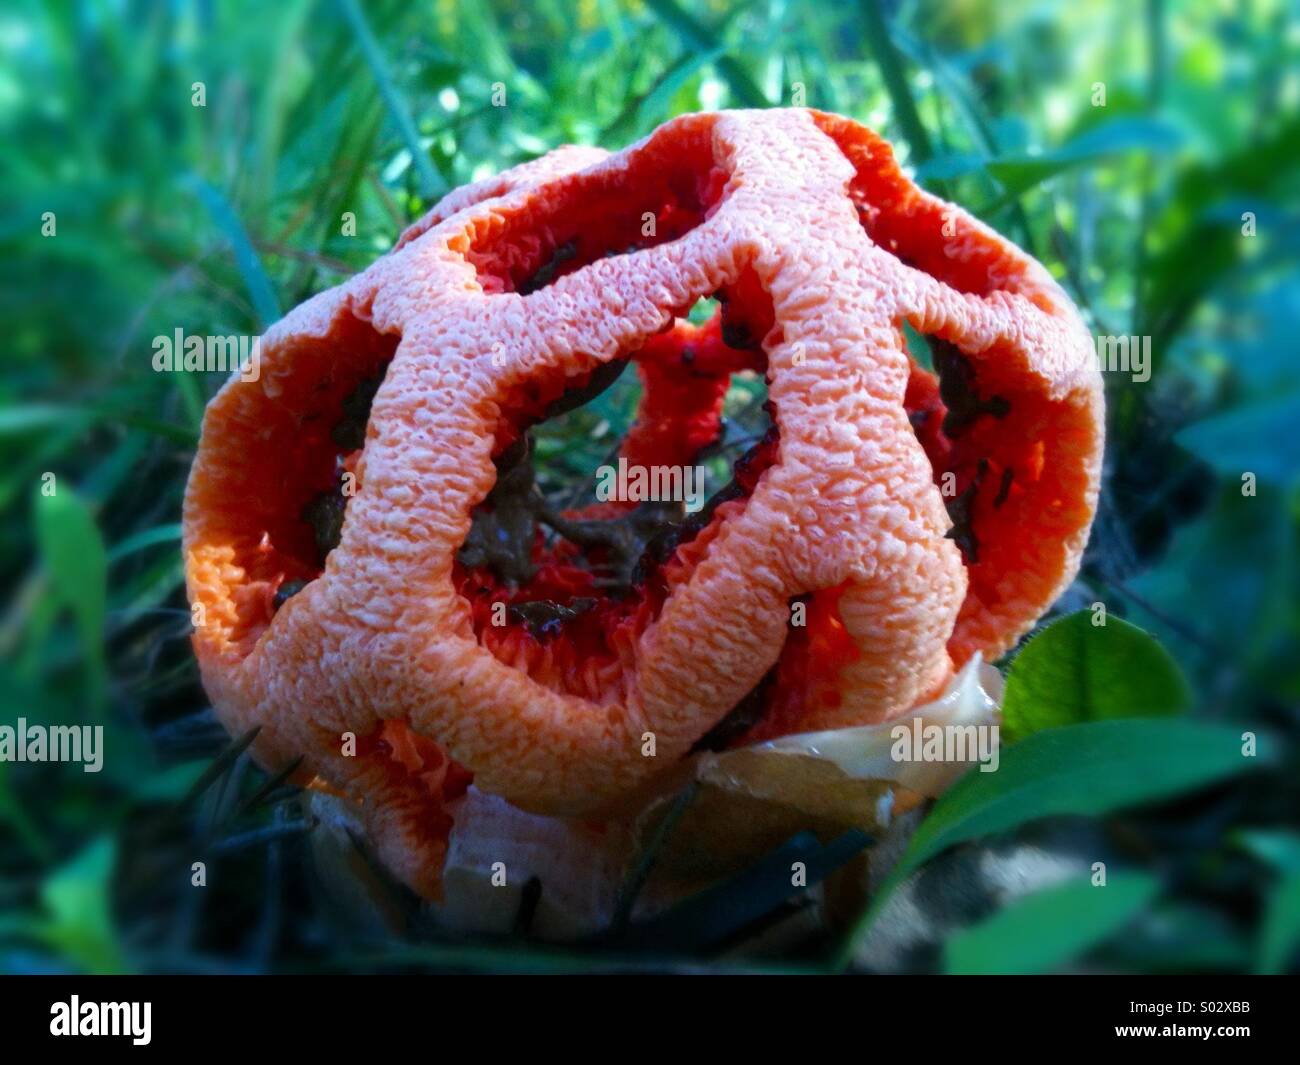 Clathrus ruber fungi Stock Photo